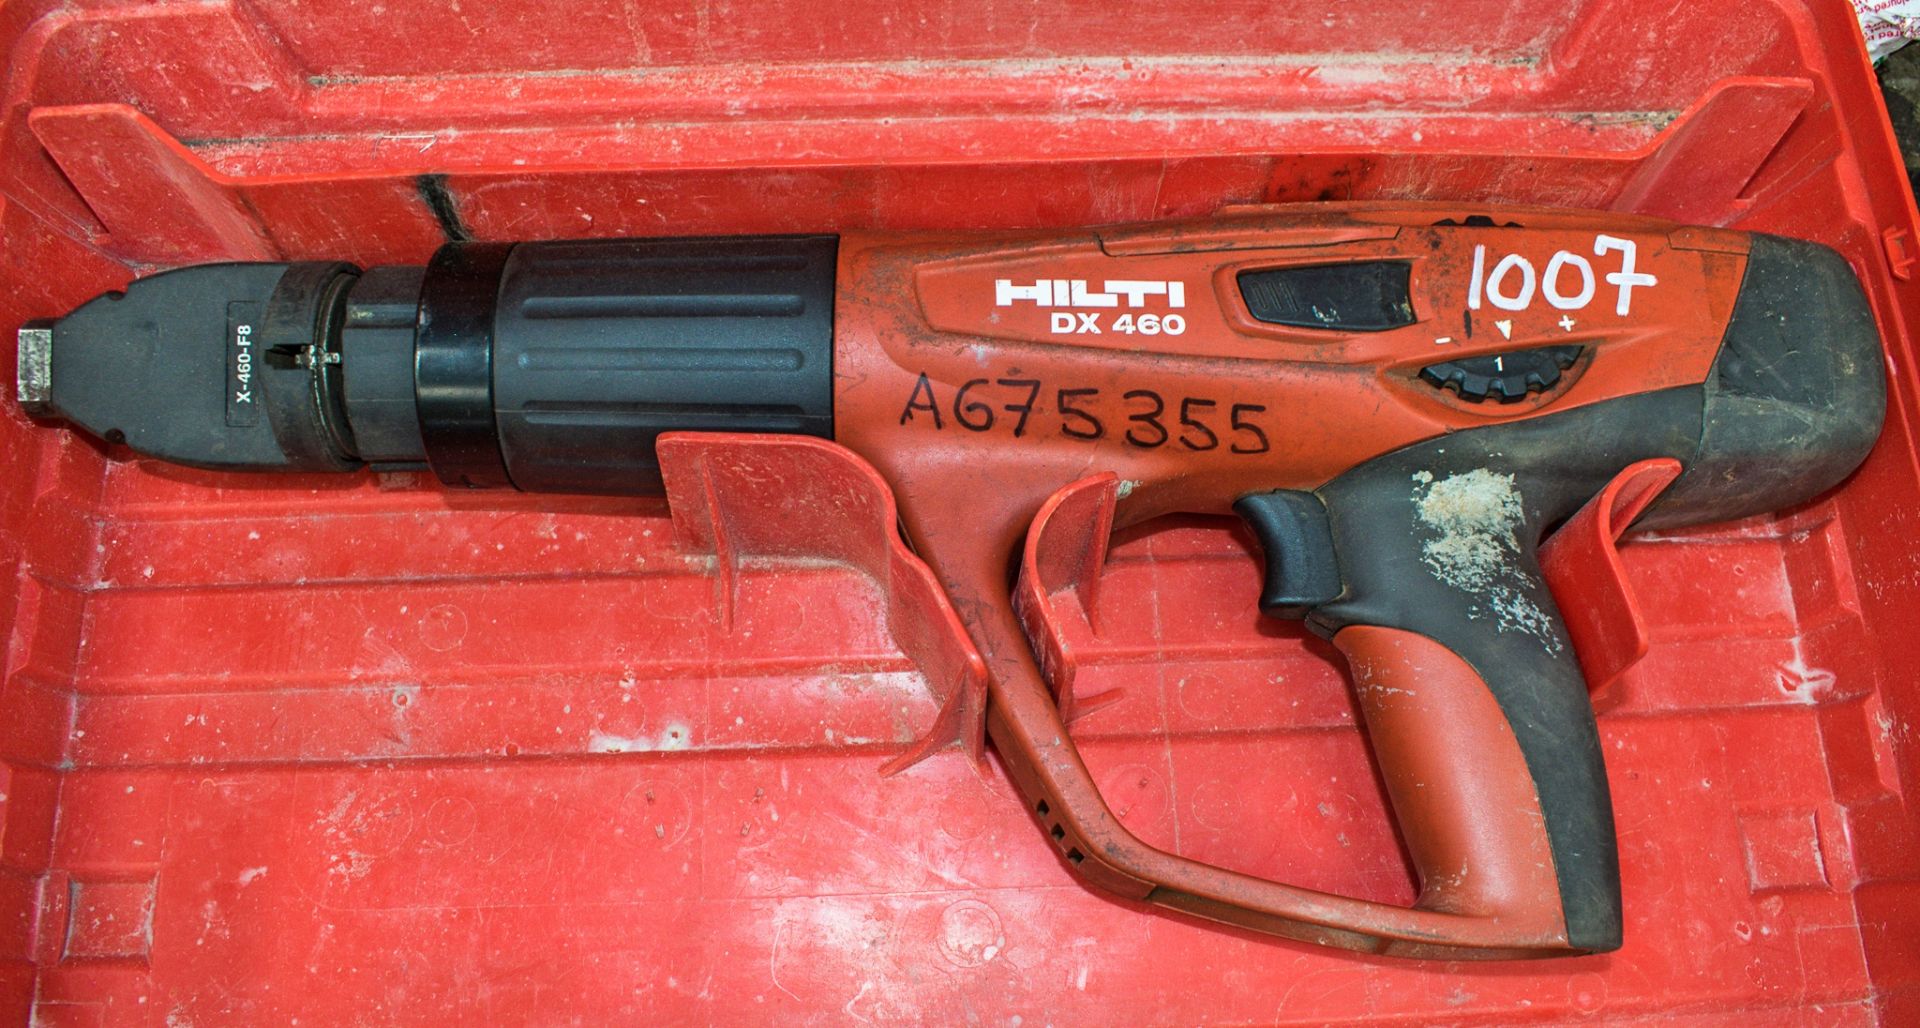 Hilti DX460 nail gun c/w carry case A675355